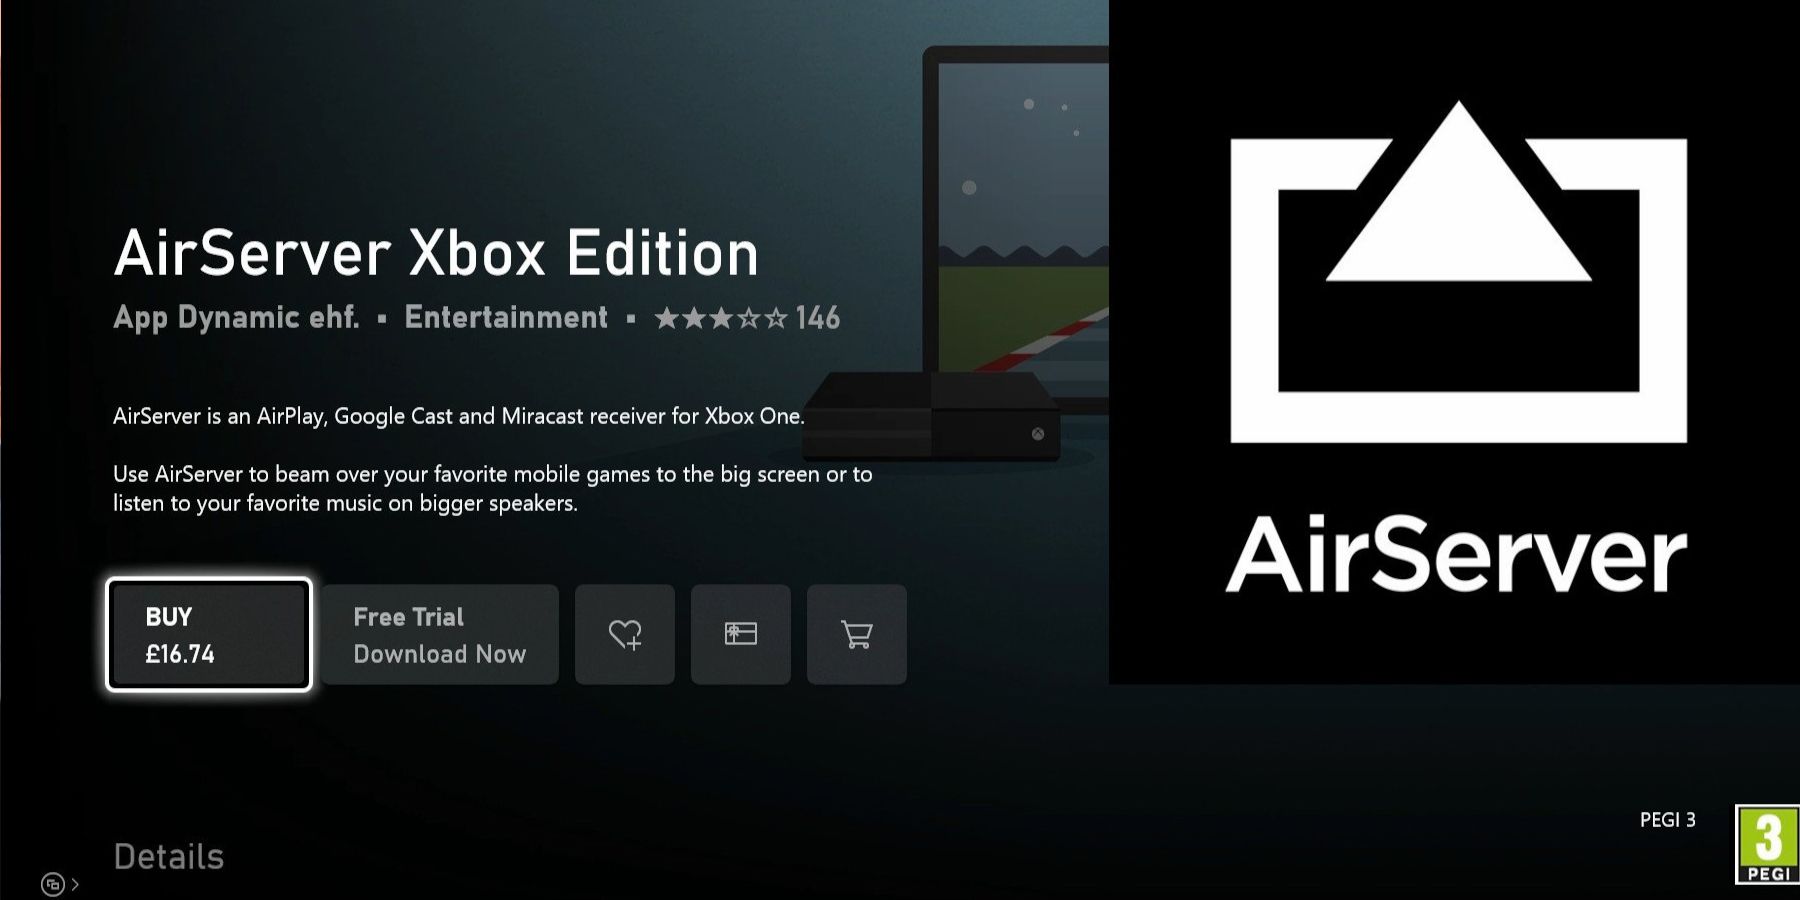 AirServer Xbox Edition